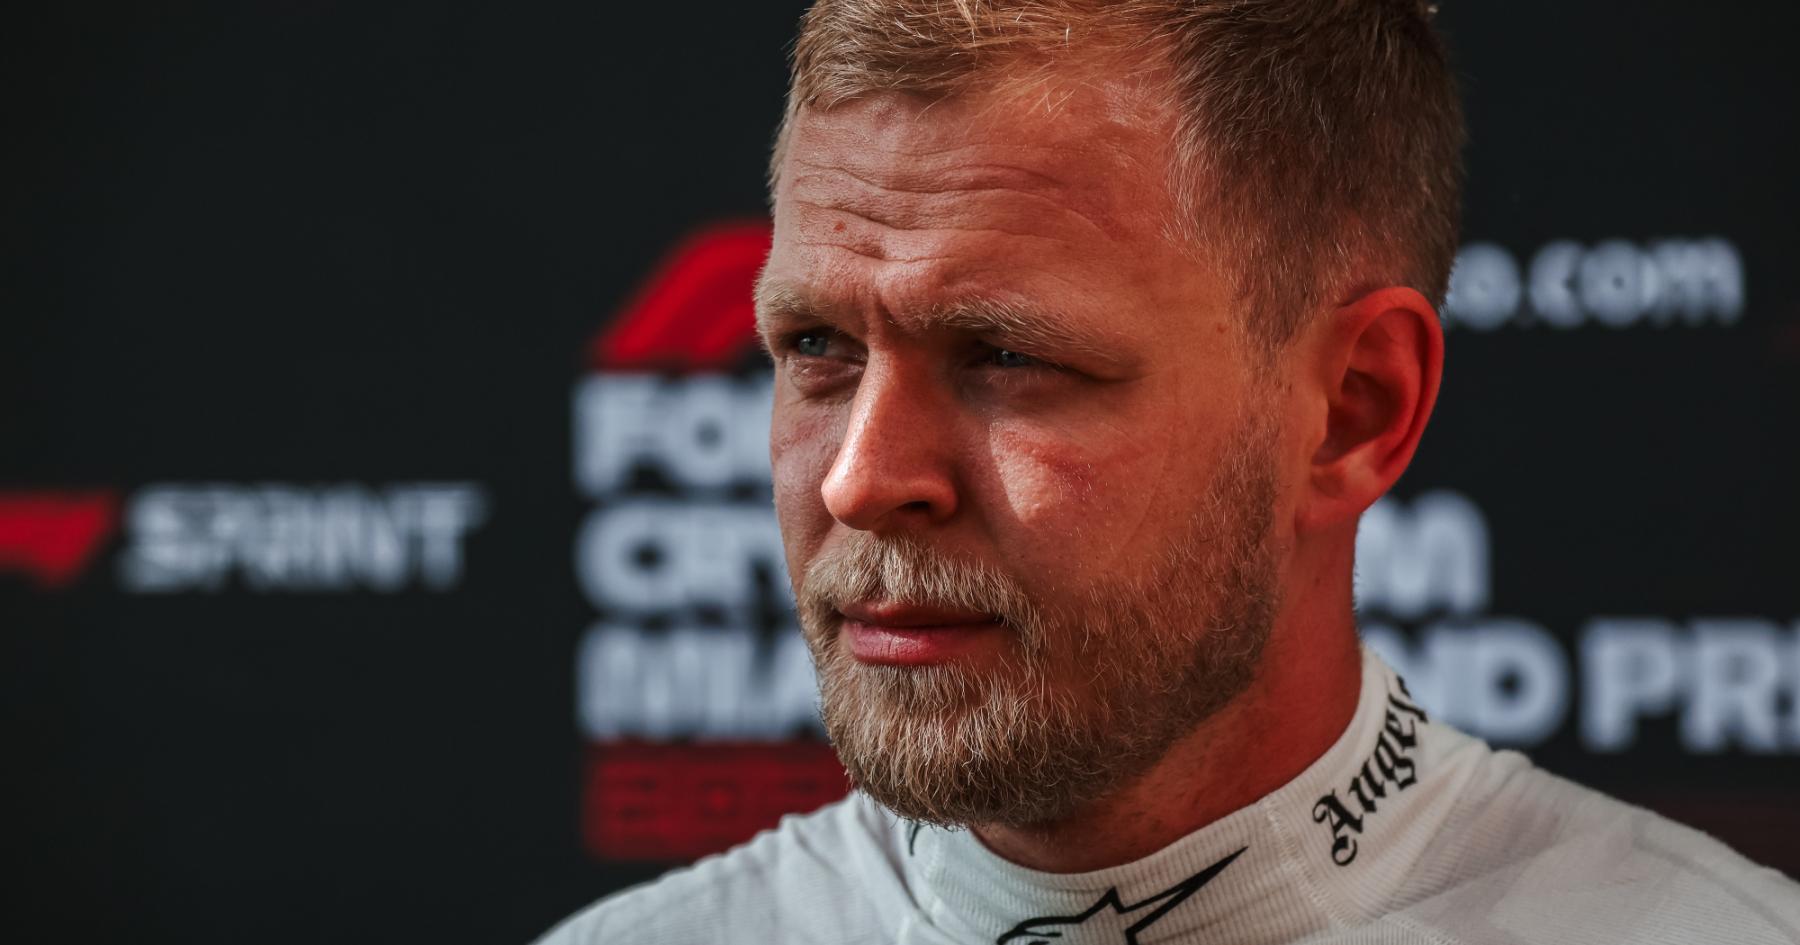 Controversy Averted: Magnussen Evades Stewards' Verdict as FIA Confronts Demand for Reform